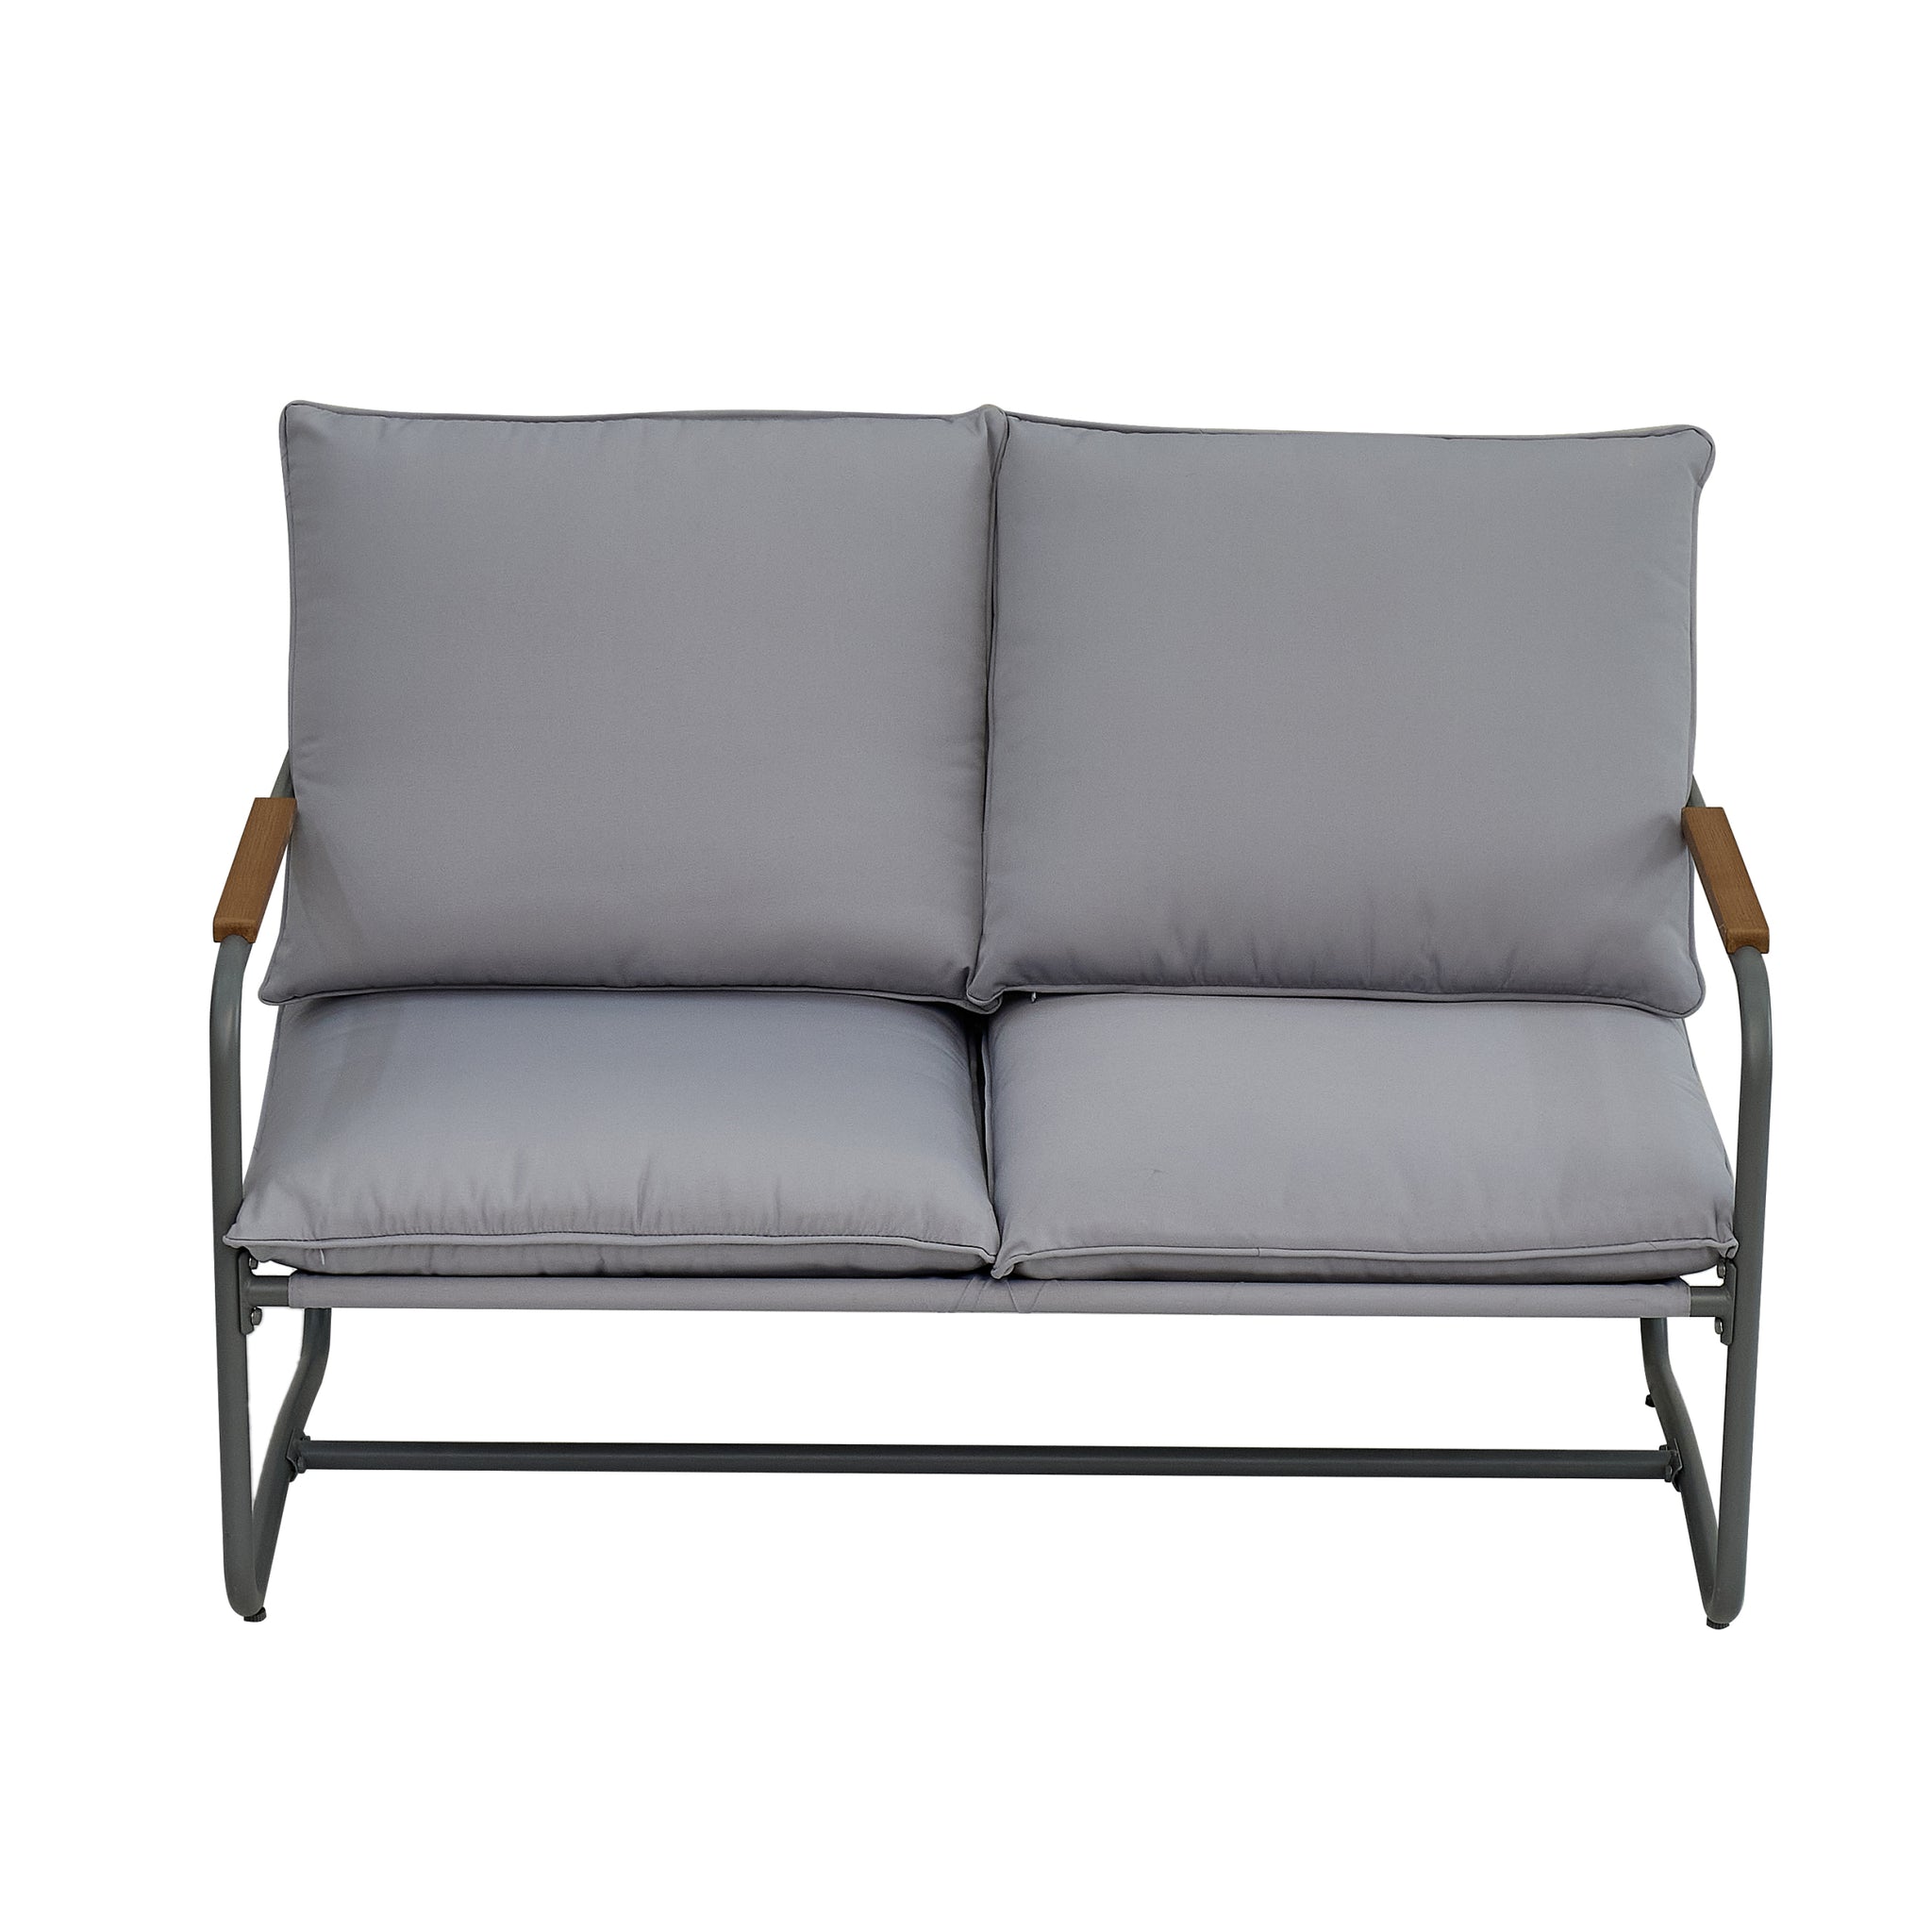 4 Piece Outdoor Patio Furniture Sets, Patio gray-aluminum